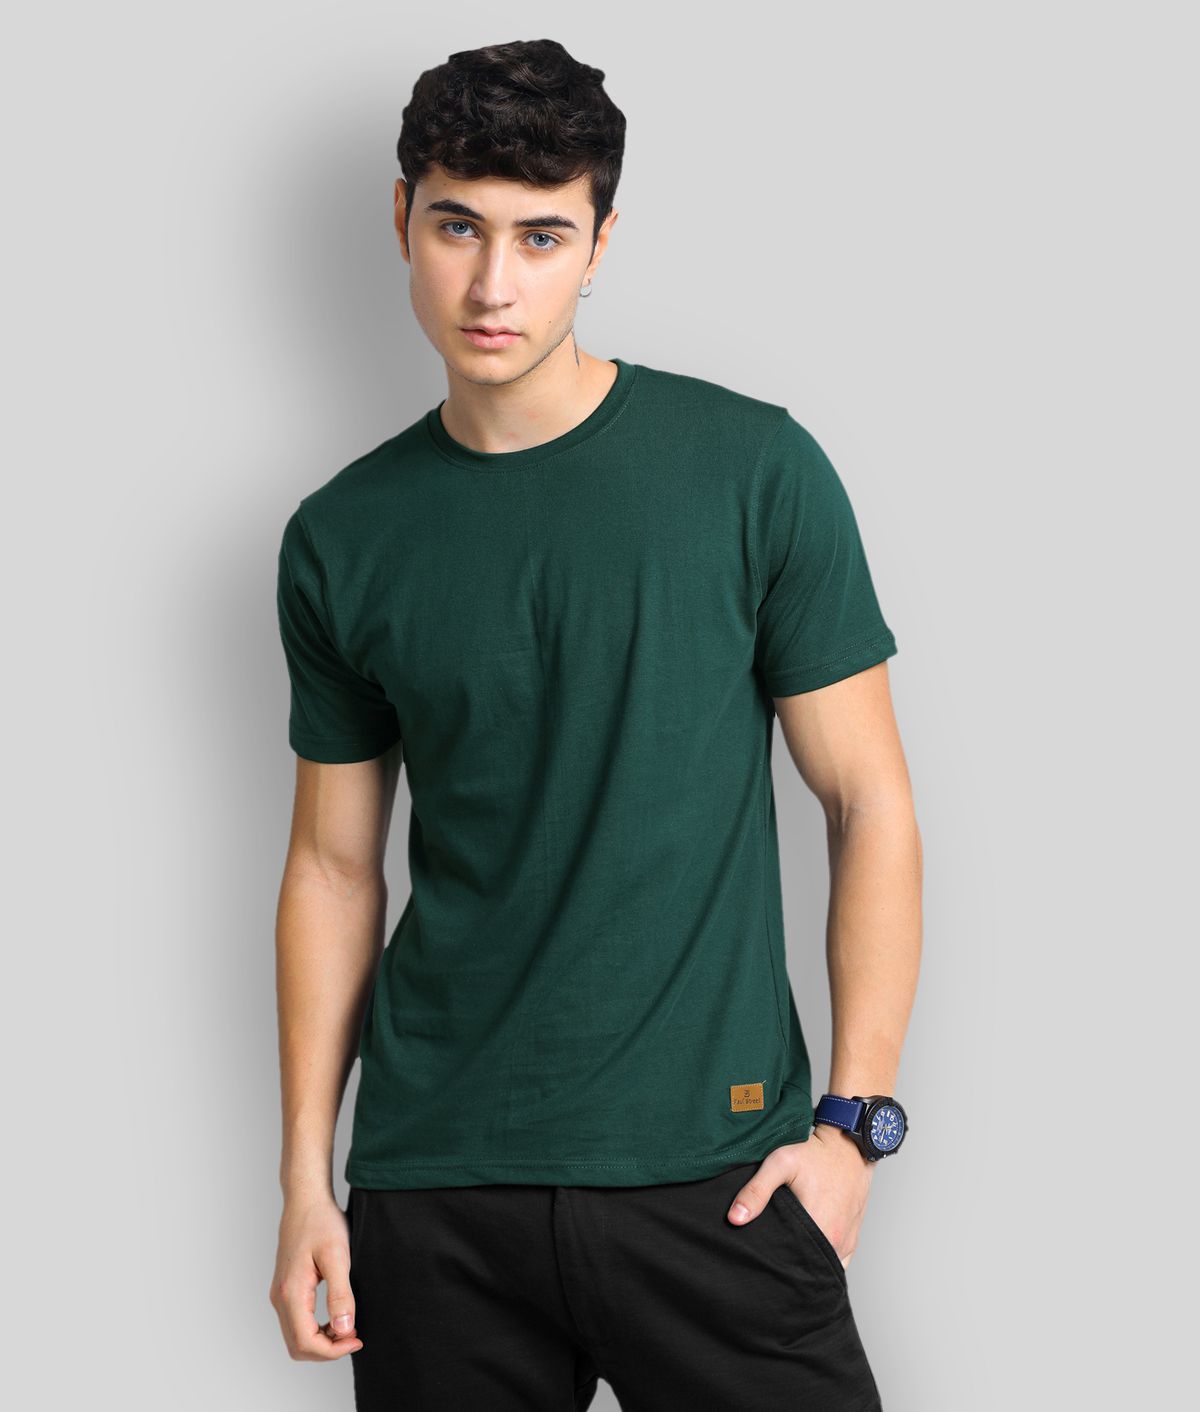     			Paul Street - Olive Green Cotton Blend Slim Fit Men's T-Shirt ( Pack of 1 )